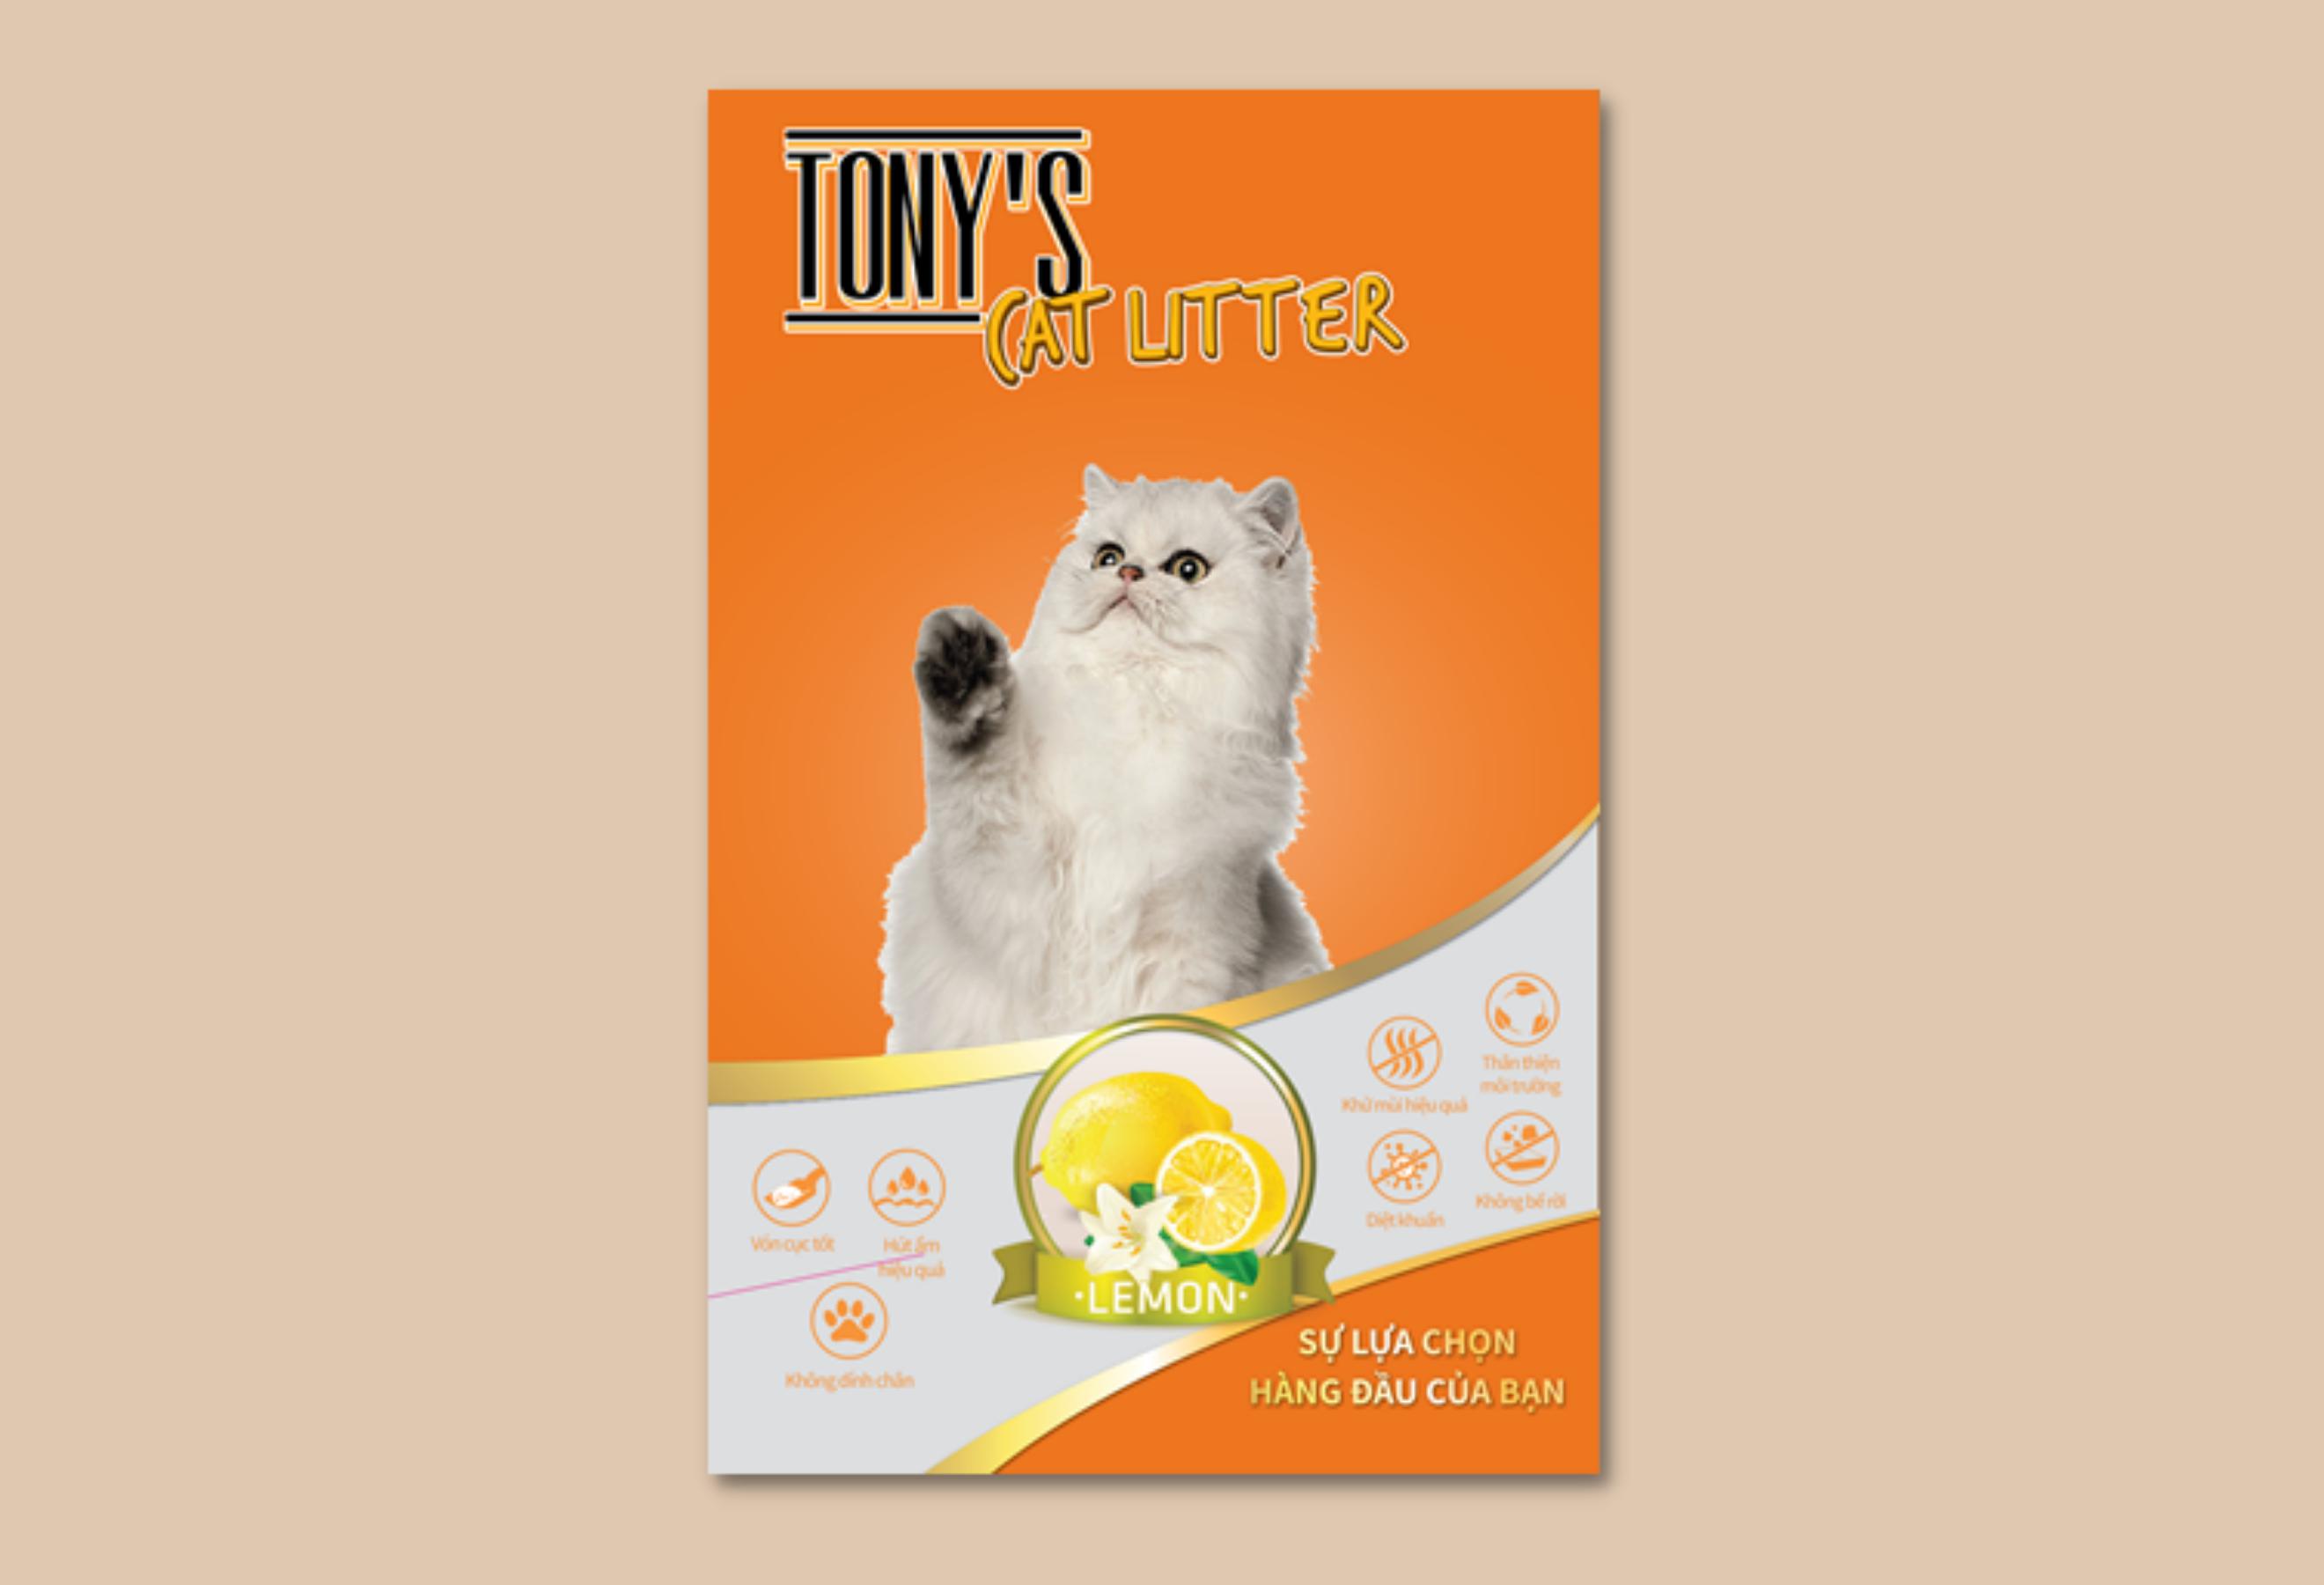 Tony's - Cát Đất Sét Cho Mèo 5L